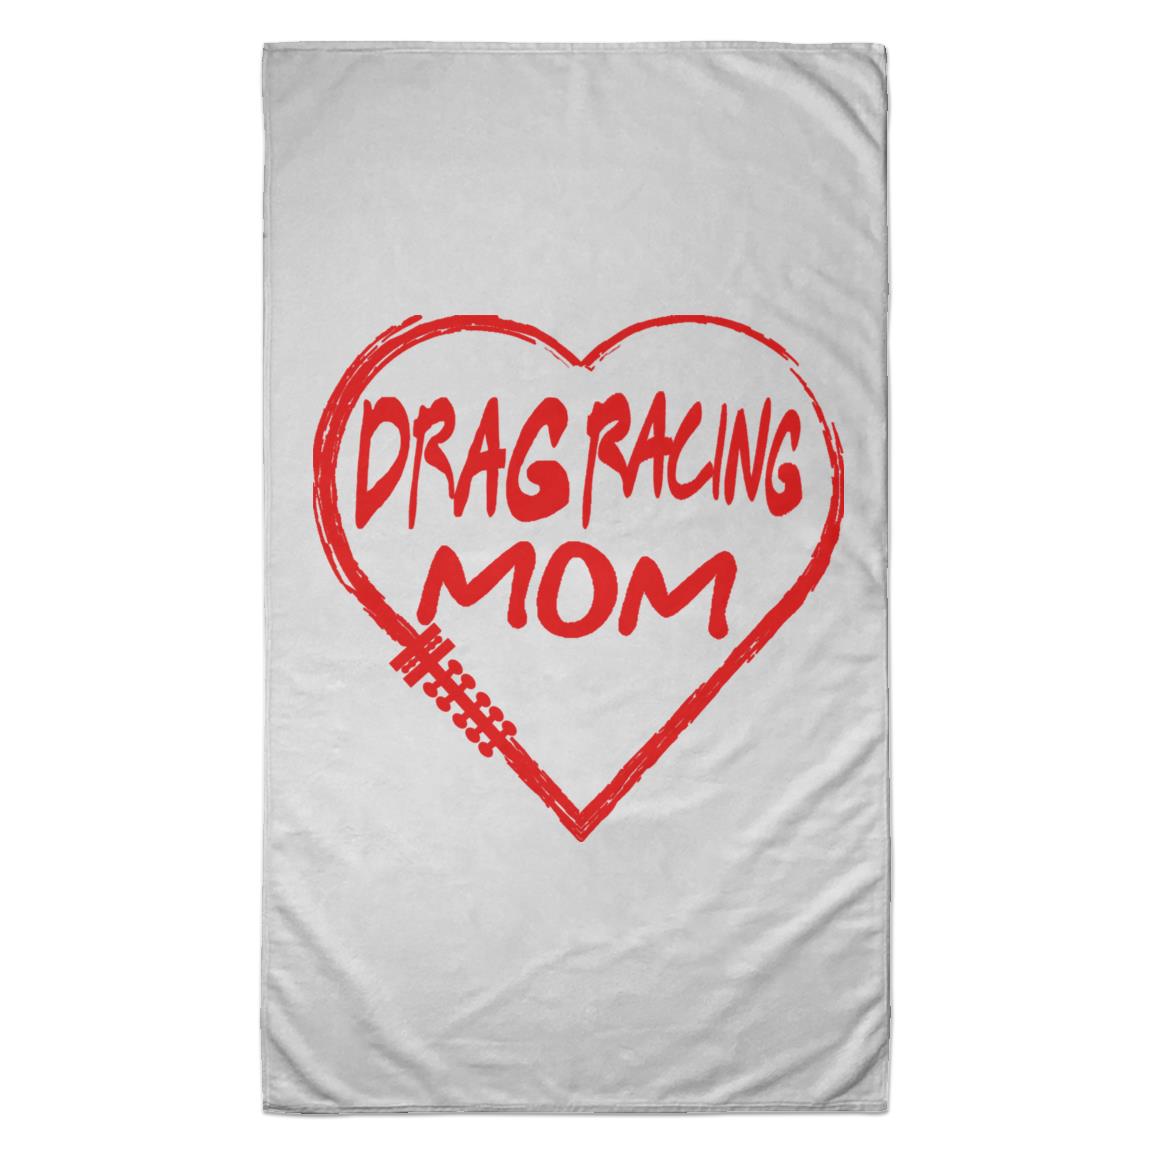 Drag Racing Mom Heart Towel - 35x60